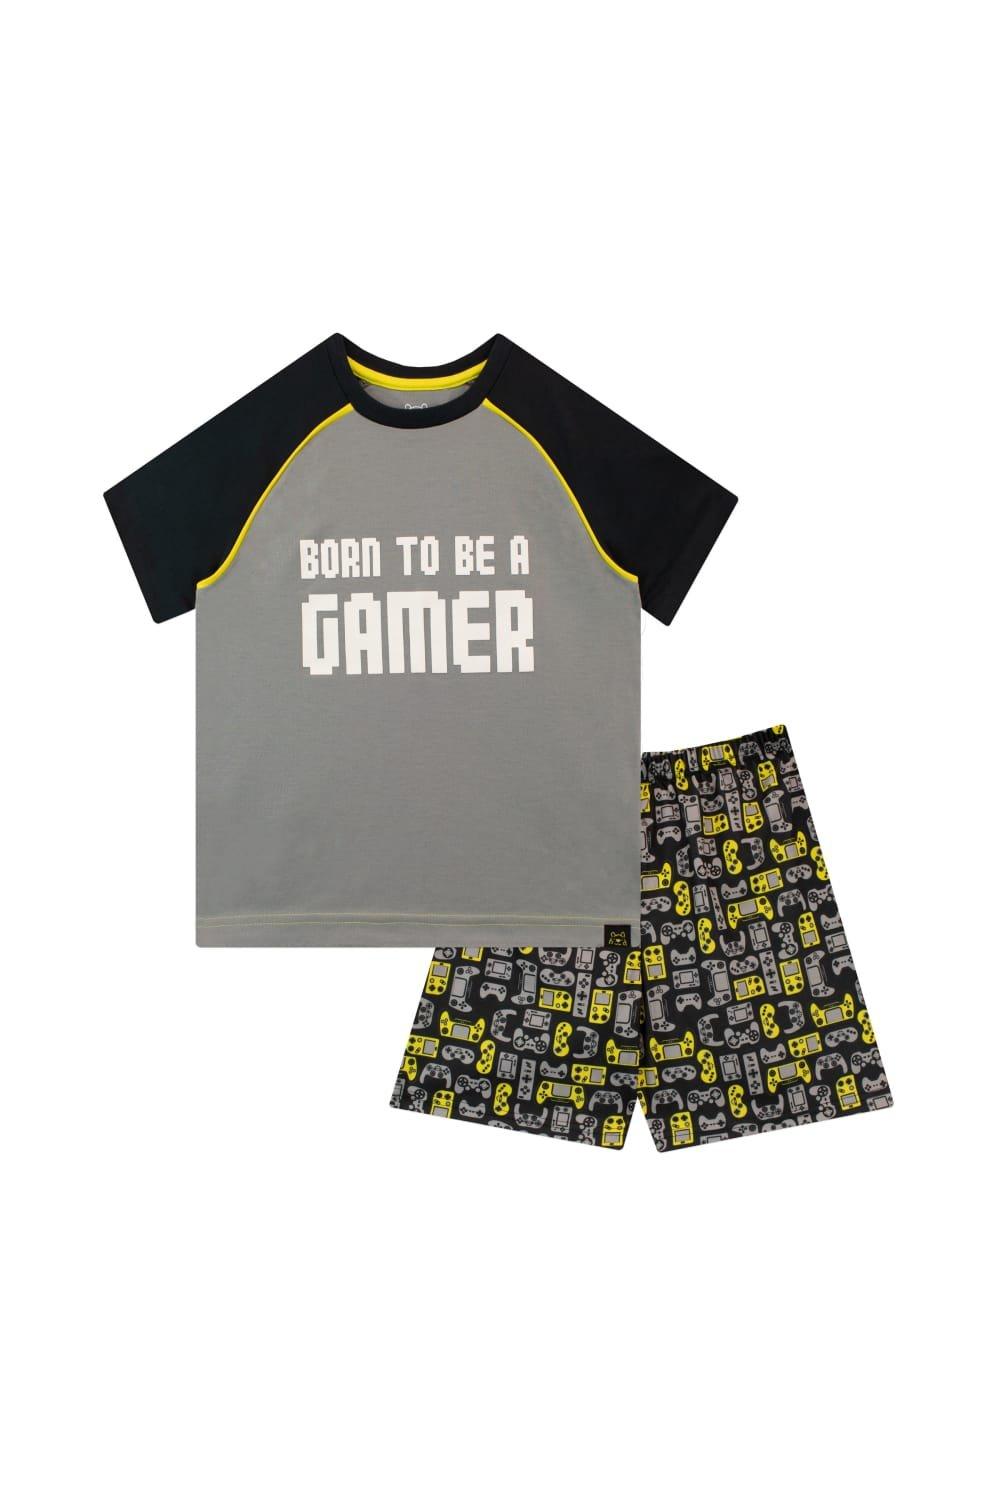 Gamer Controller Short Pyjamas